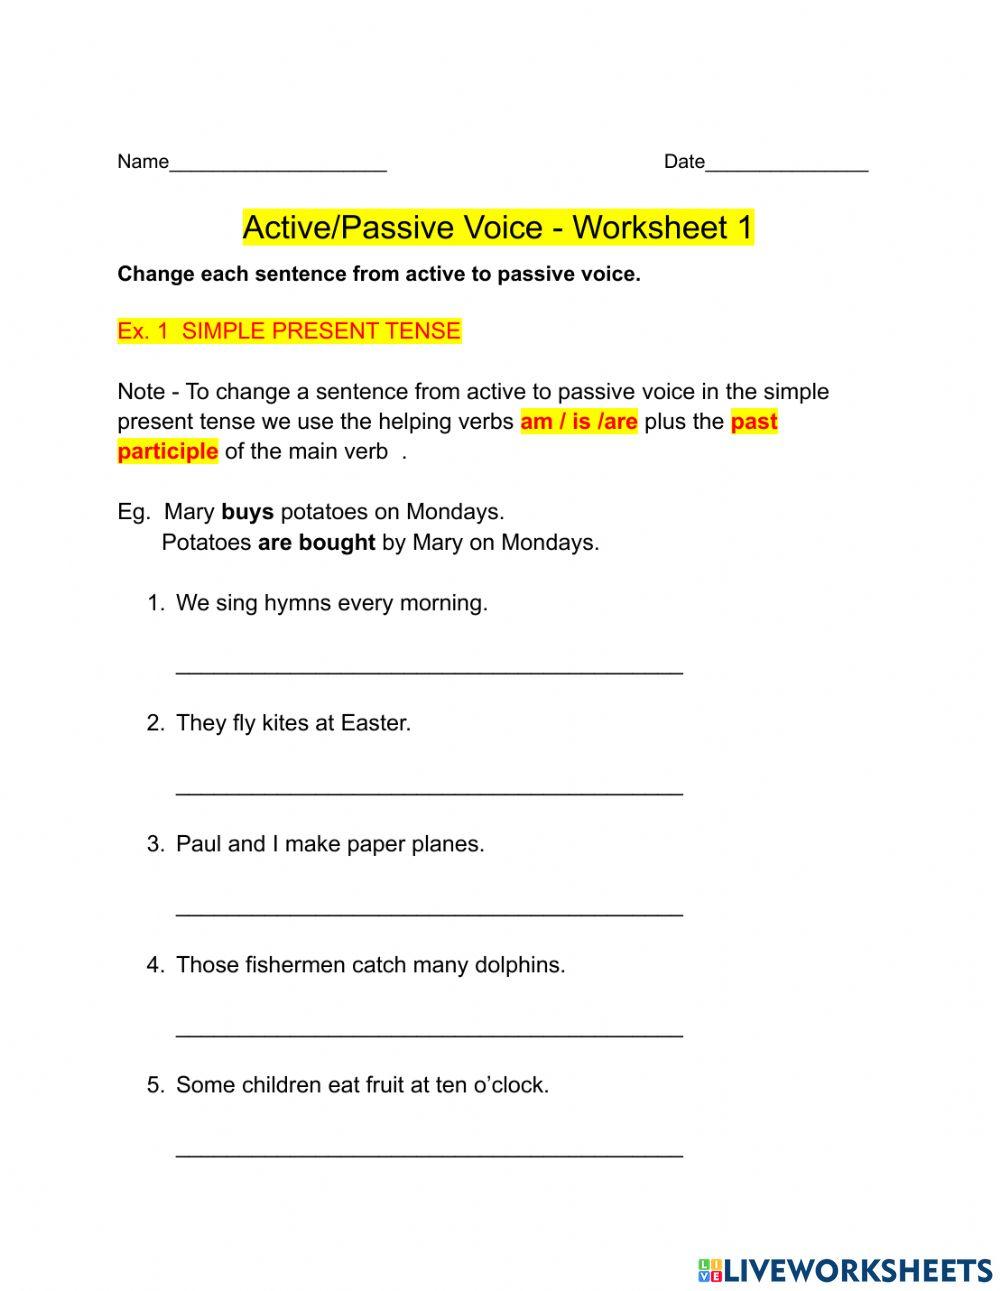 Active-Passive Voice - Worksheet 1